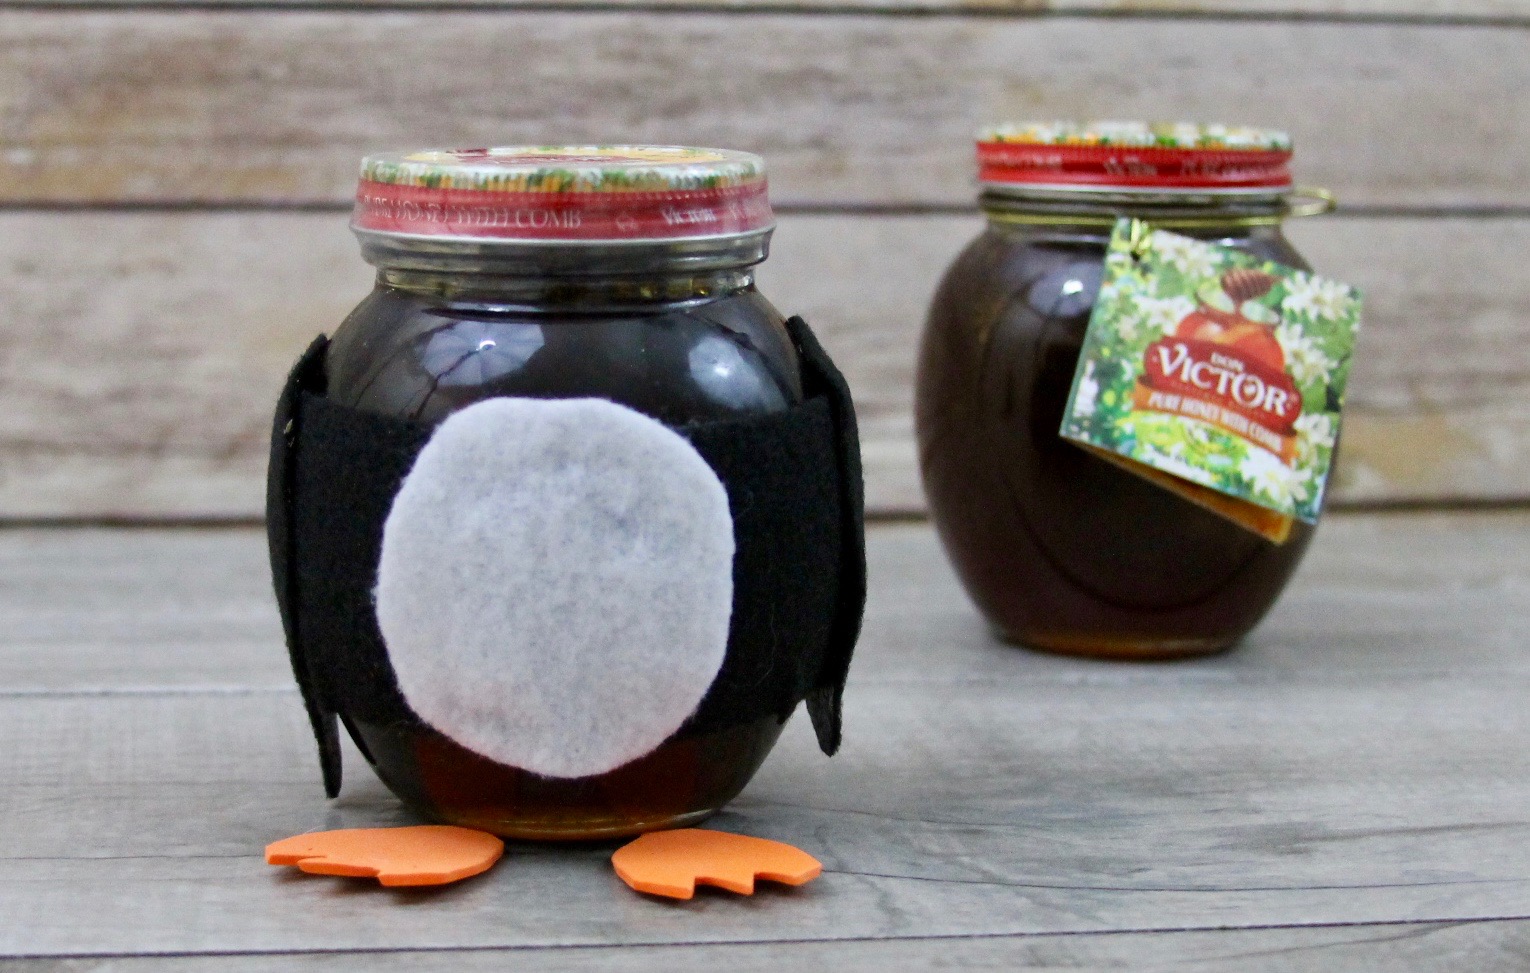 DIY honey jar penguin with Don Victor honey